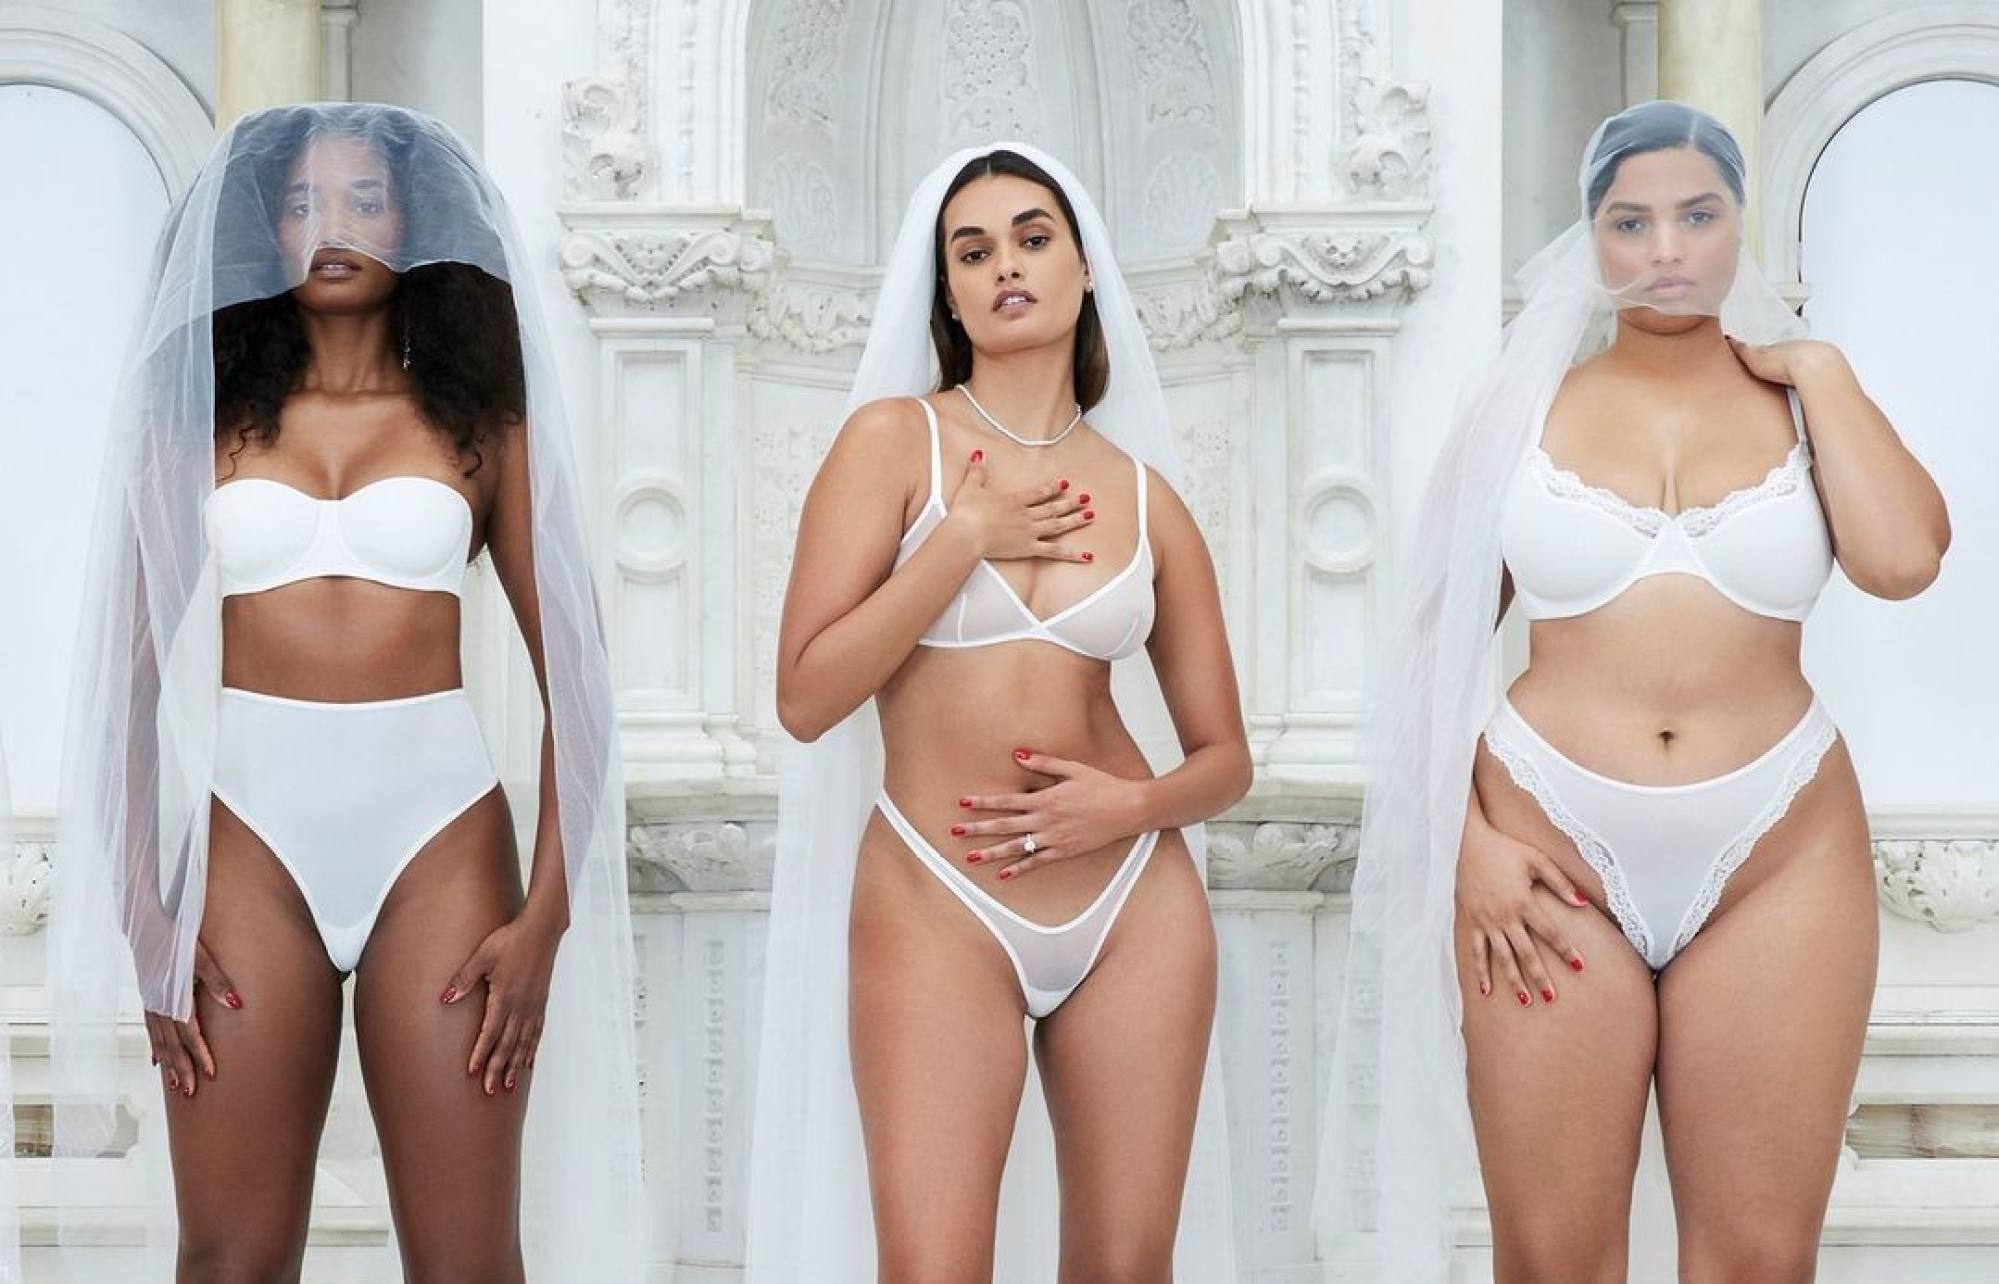 Kim Kardashian's SKIMS brand announced as official underwear